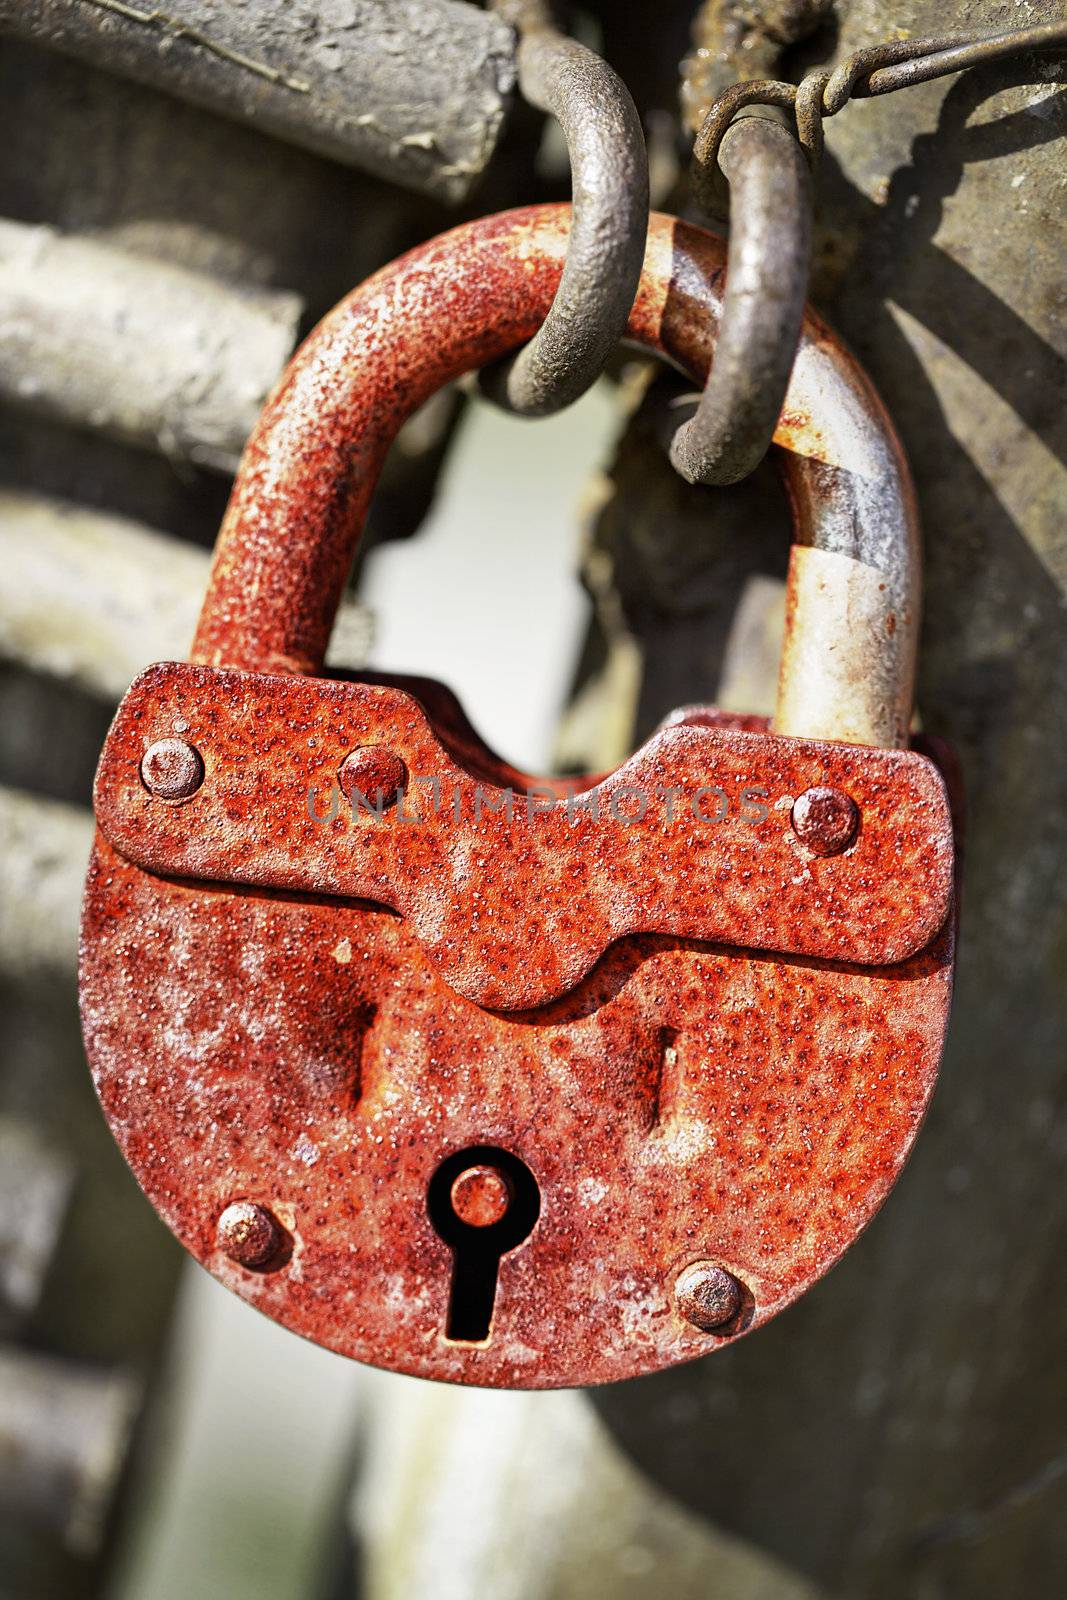 Rusty old locked padlock on the gate